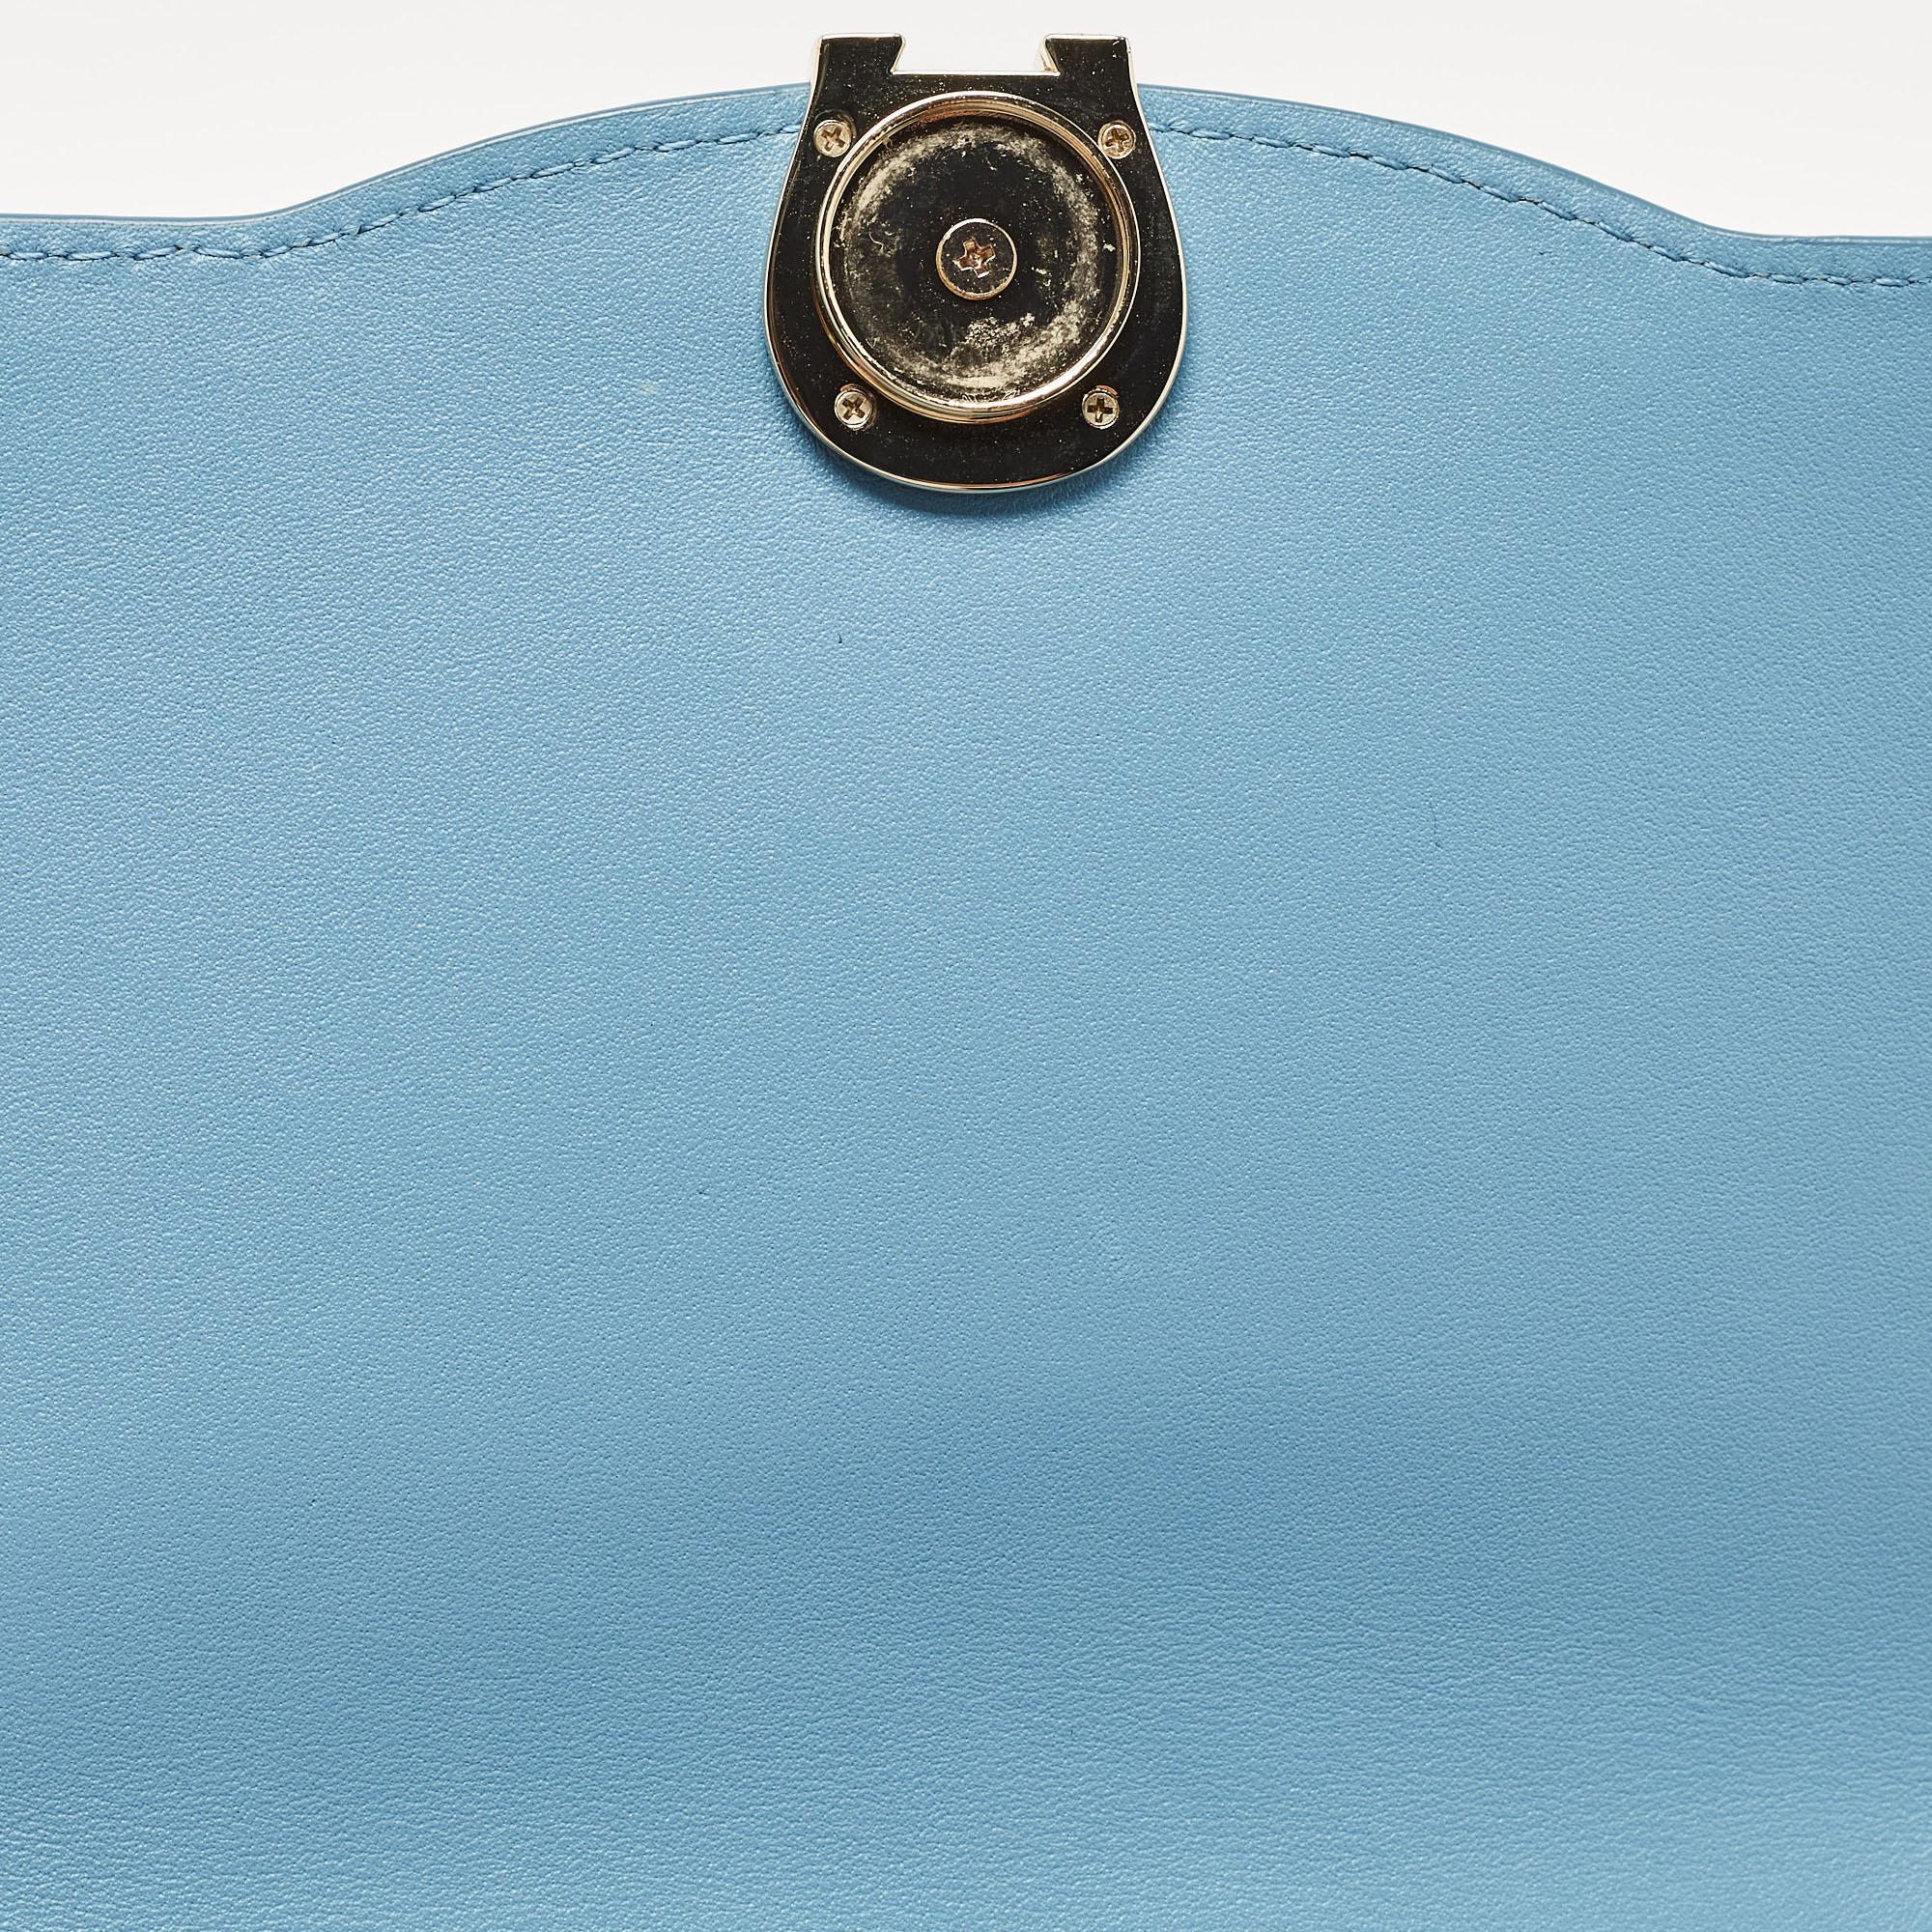 Aigner Blue Quilted Leather Diadora Shoulder Bag In Excellent Condition For Sale In Dubai, Al Qouz 2